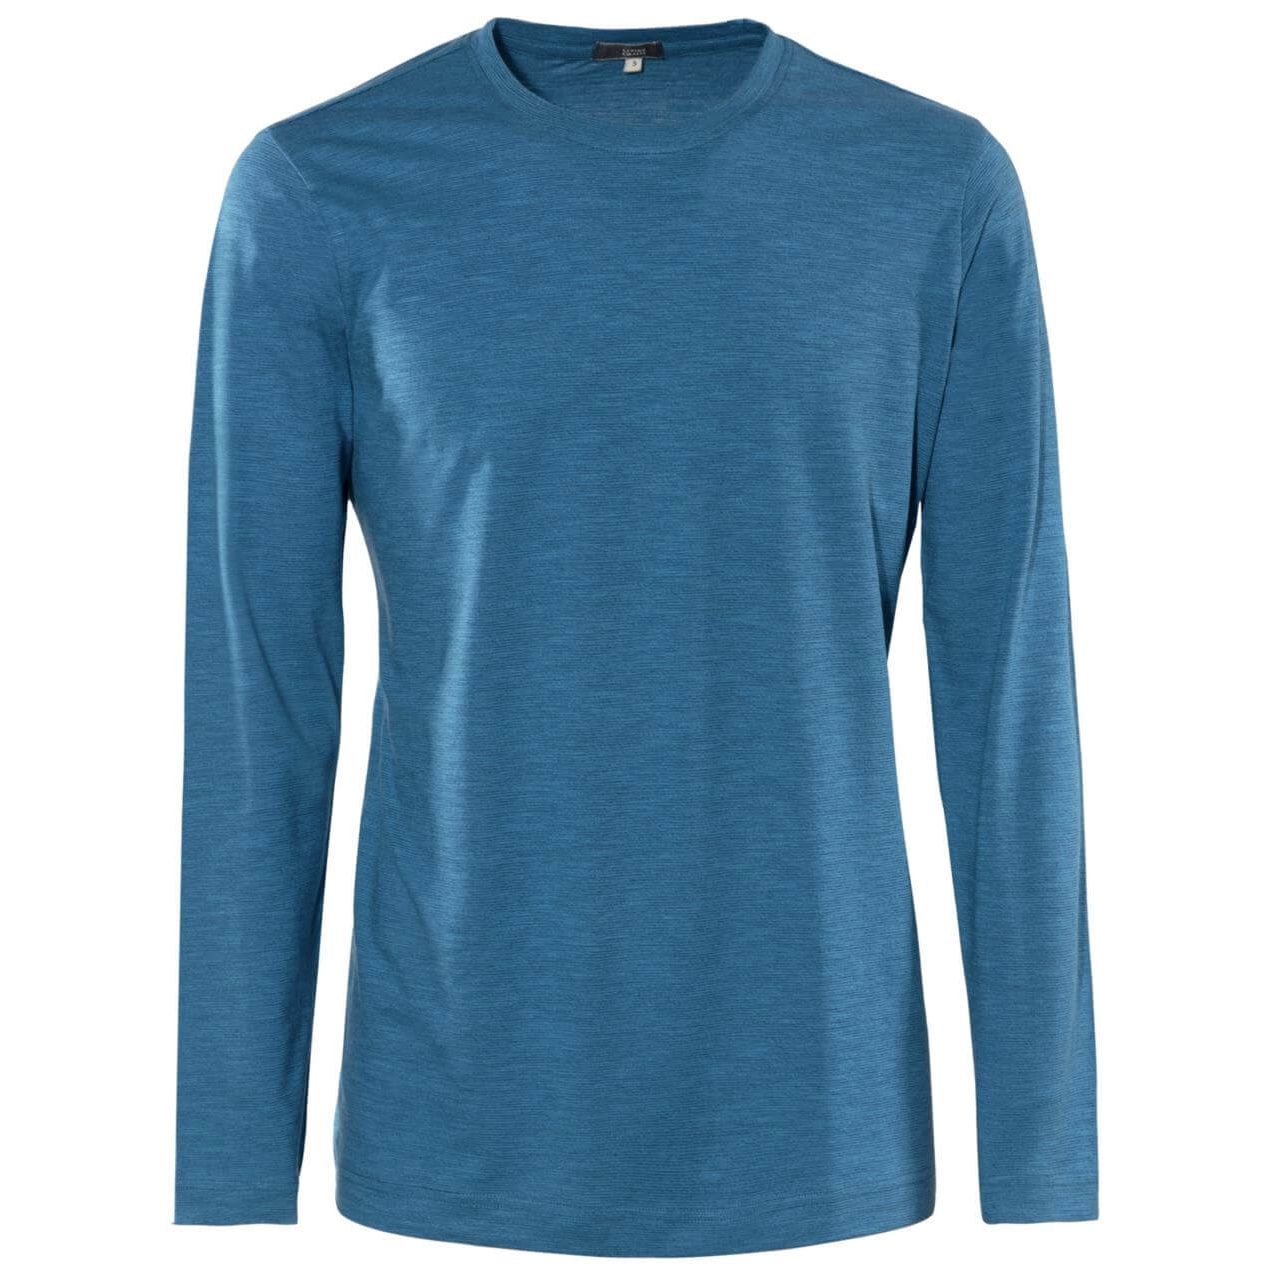 Langarm-Shirt NOAH retro blue